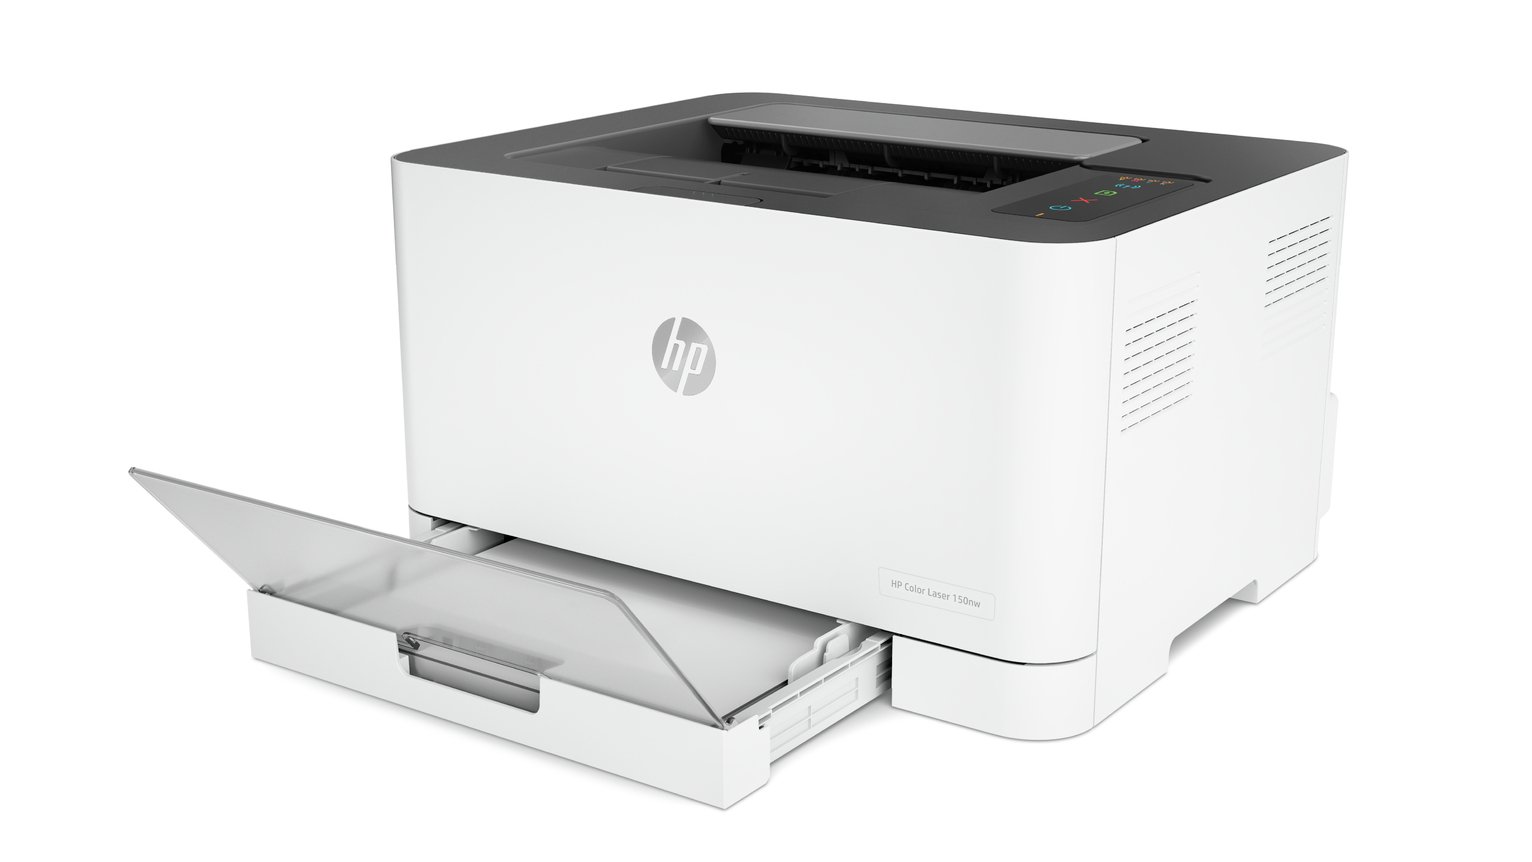 HP LaserJet 150NW Wireless Colour Laser Printer Review